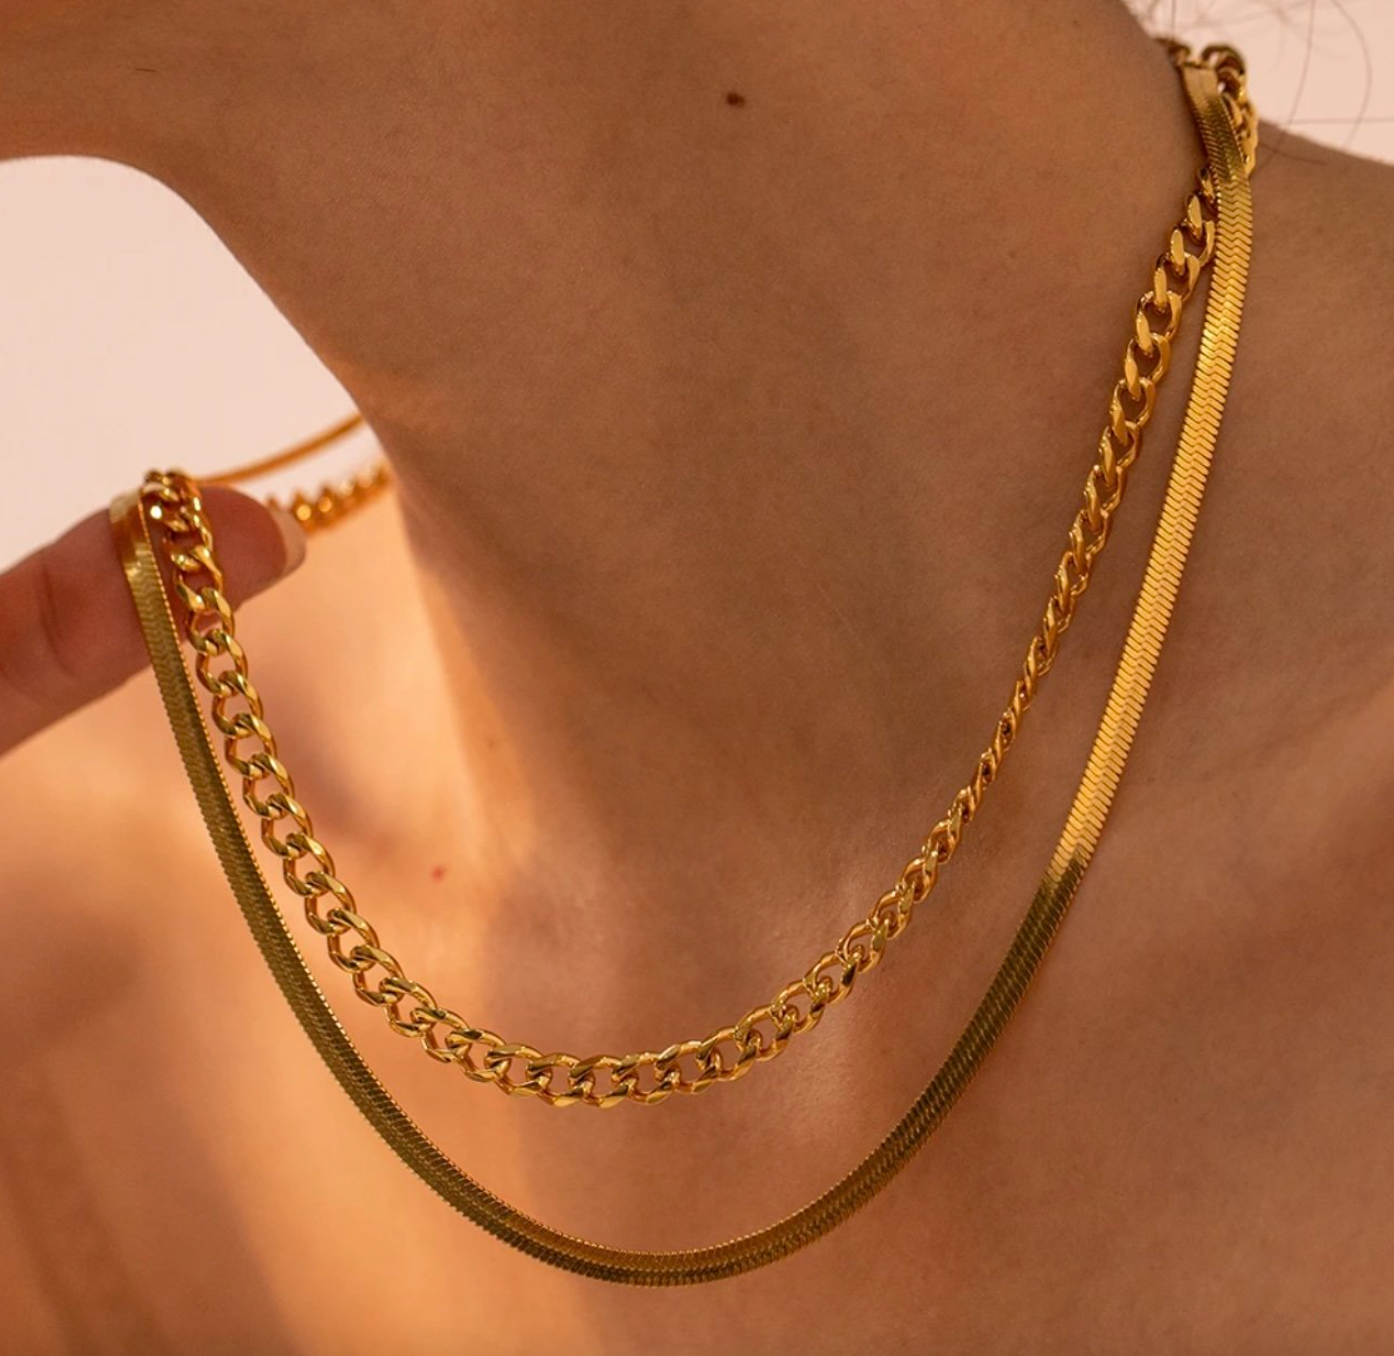 Chain + Herringbone Necklace